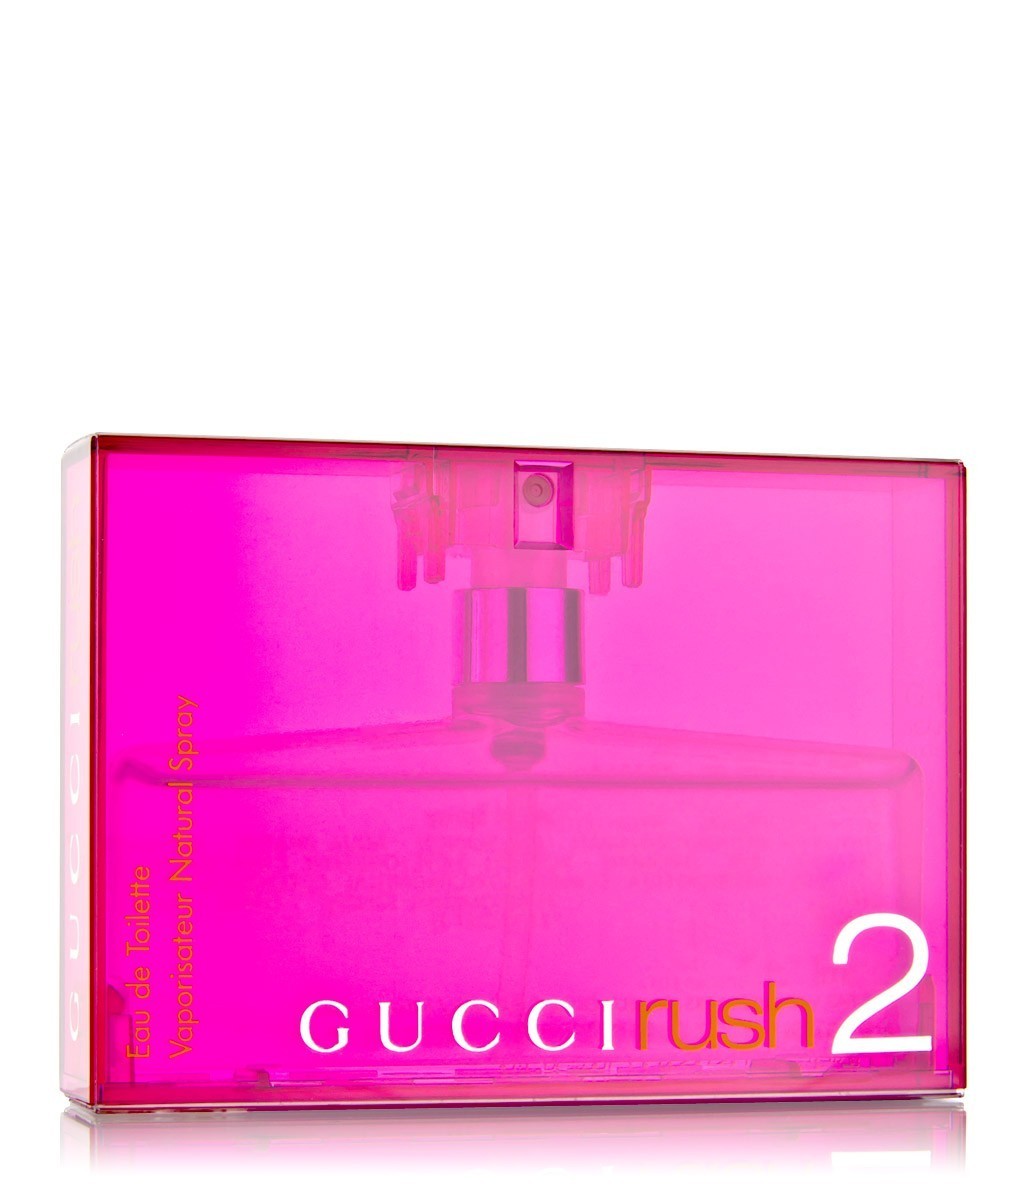 Gucci Rush 2 50 ml - kr